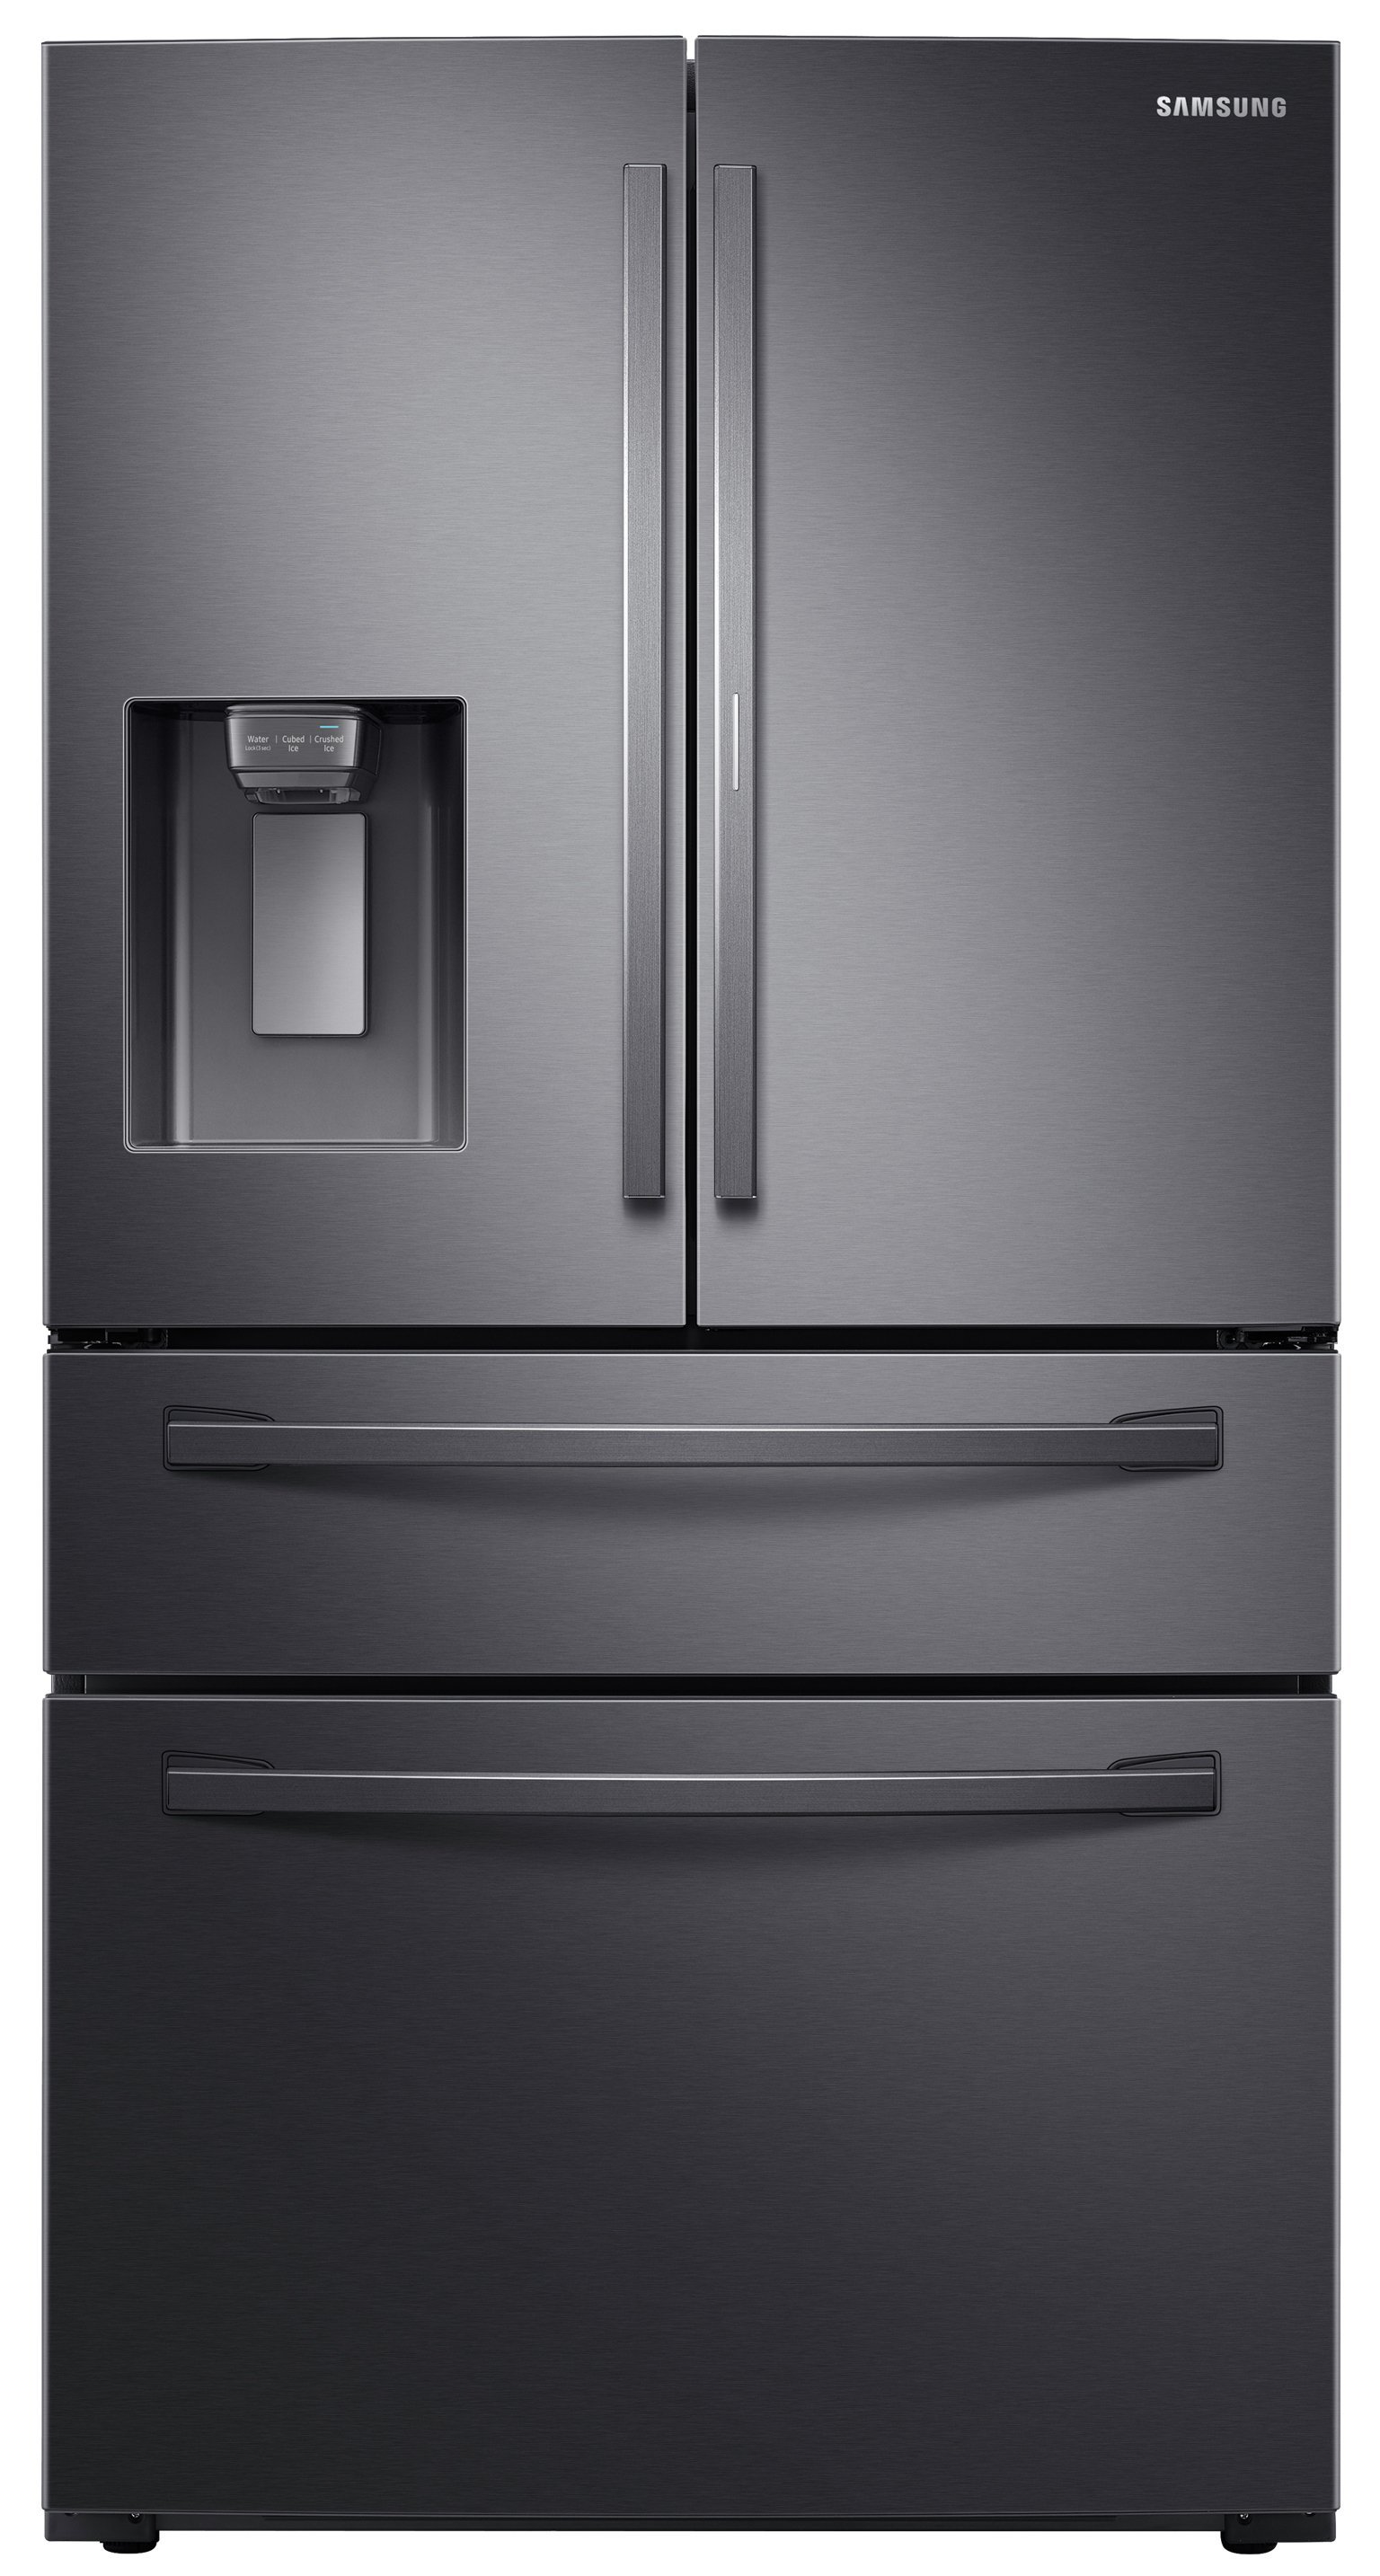 Black stainless steel Samsung counter depth refrigerator